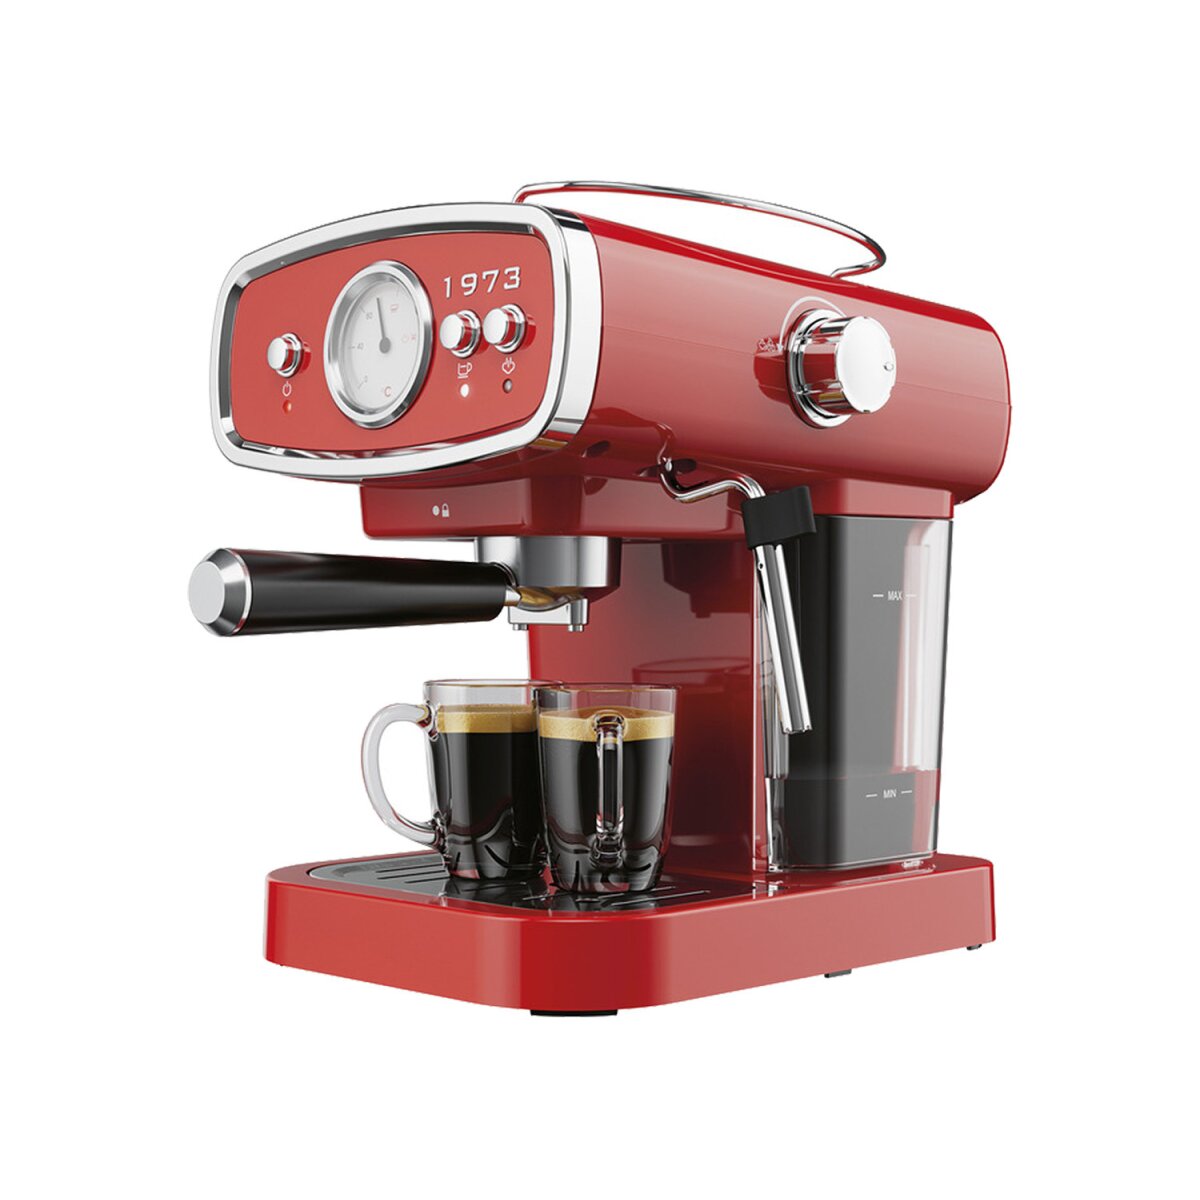 € 1050 W Espressomaschine SILVERCREST® 81,99 neuwertig, 2-in-1, B-Ware »SEML - 1050 A1«, KITCHEN TOOLS